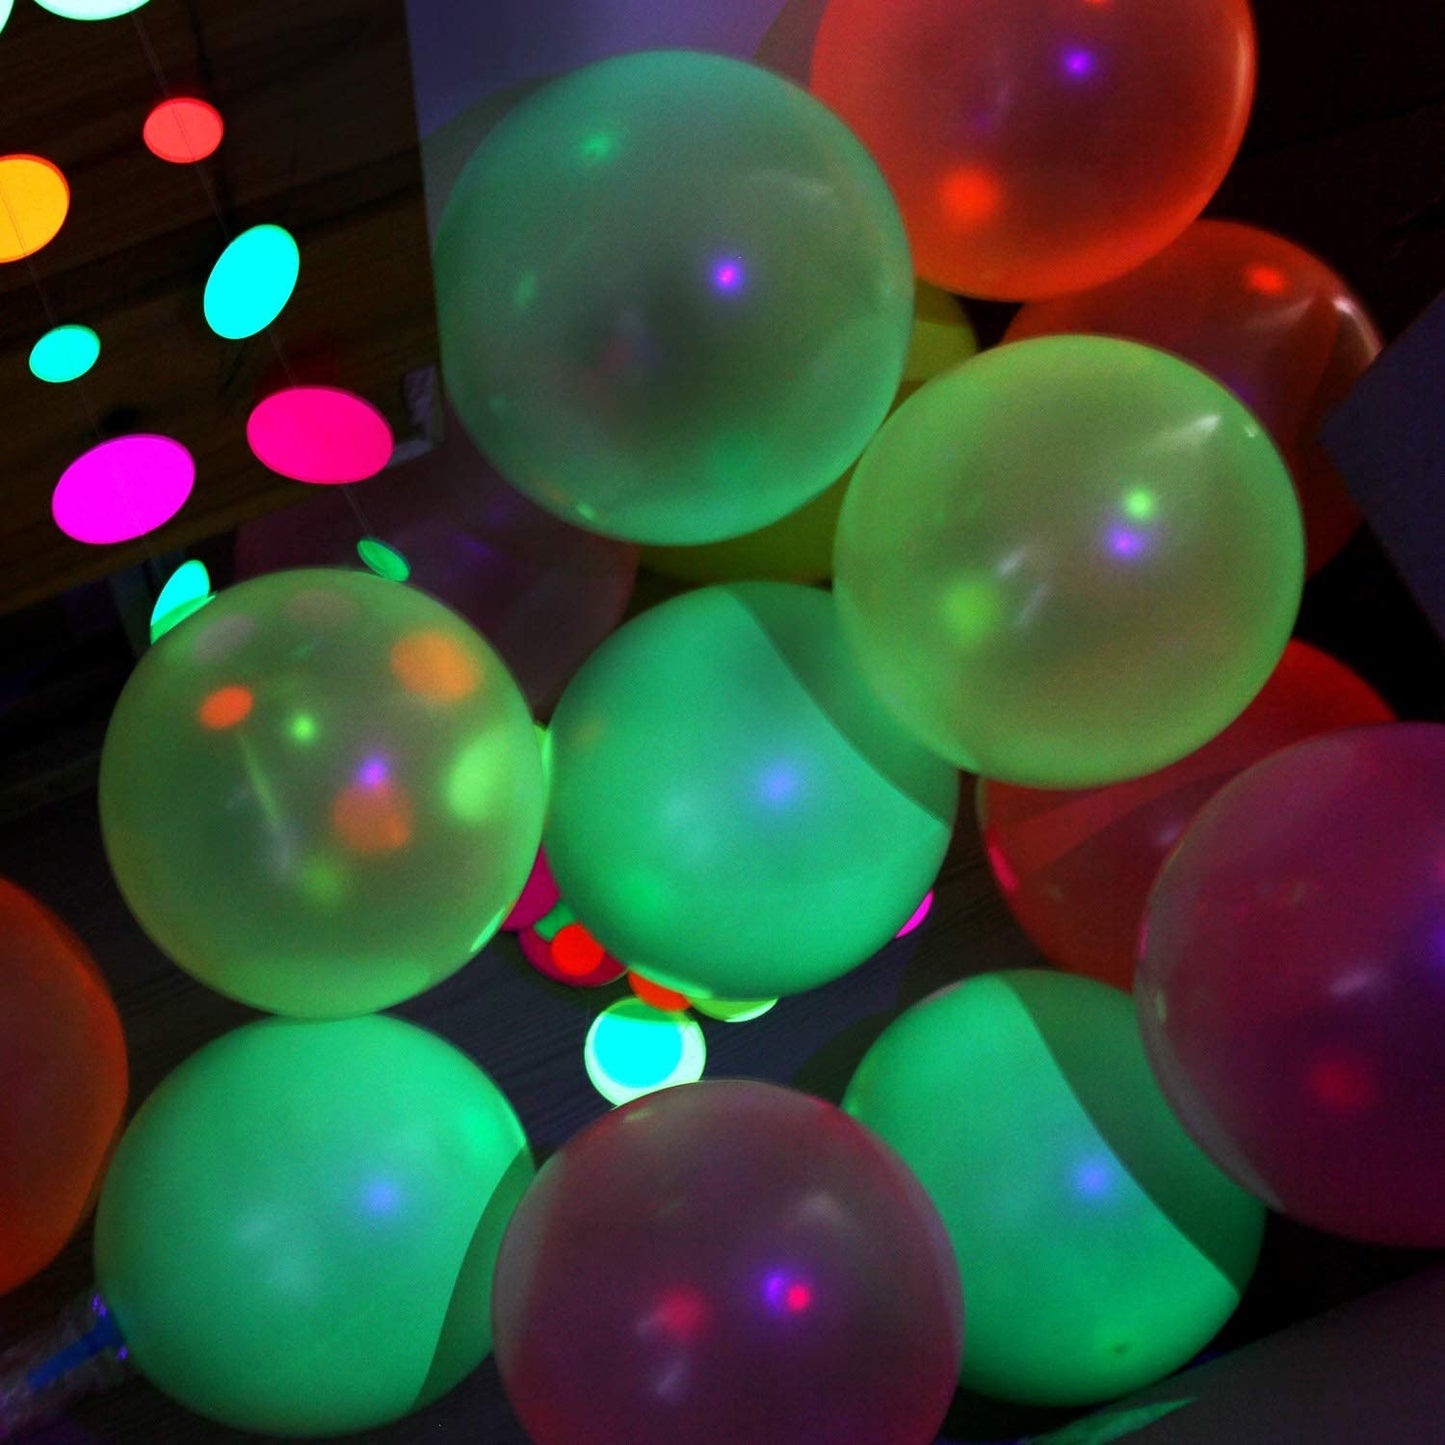 Black Neon Glow Balloons Arch Kits